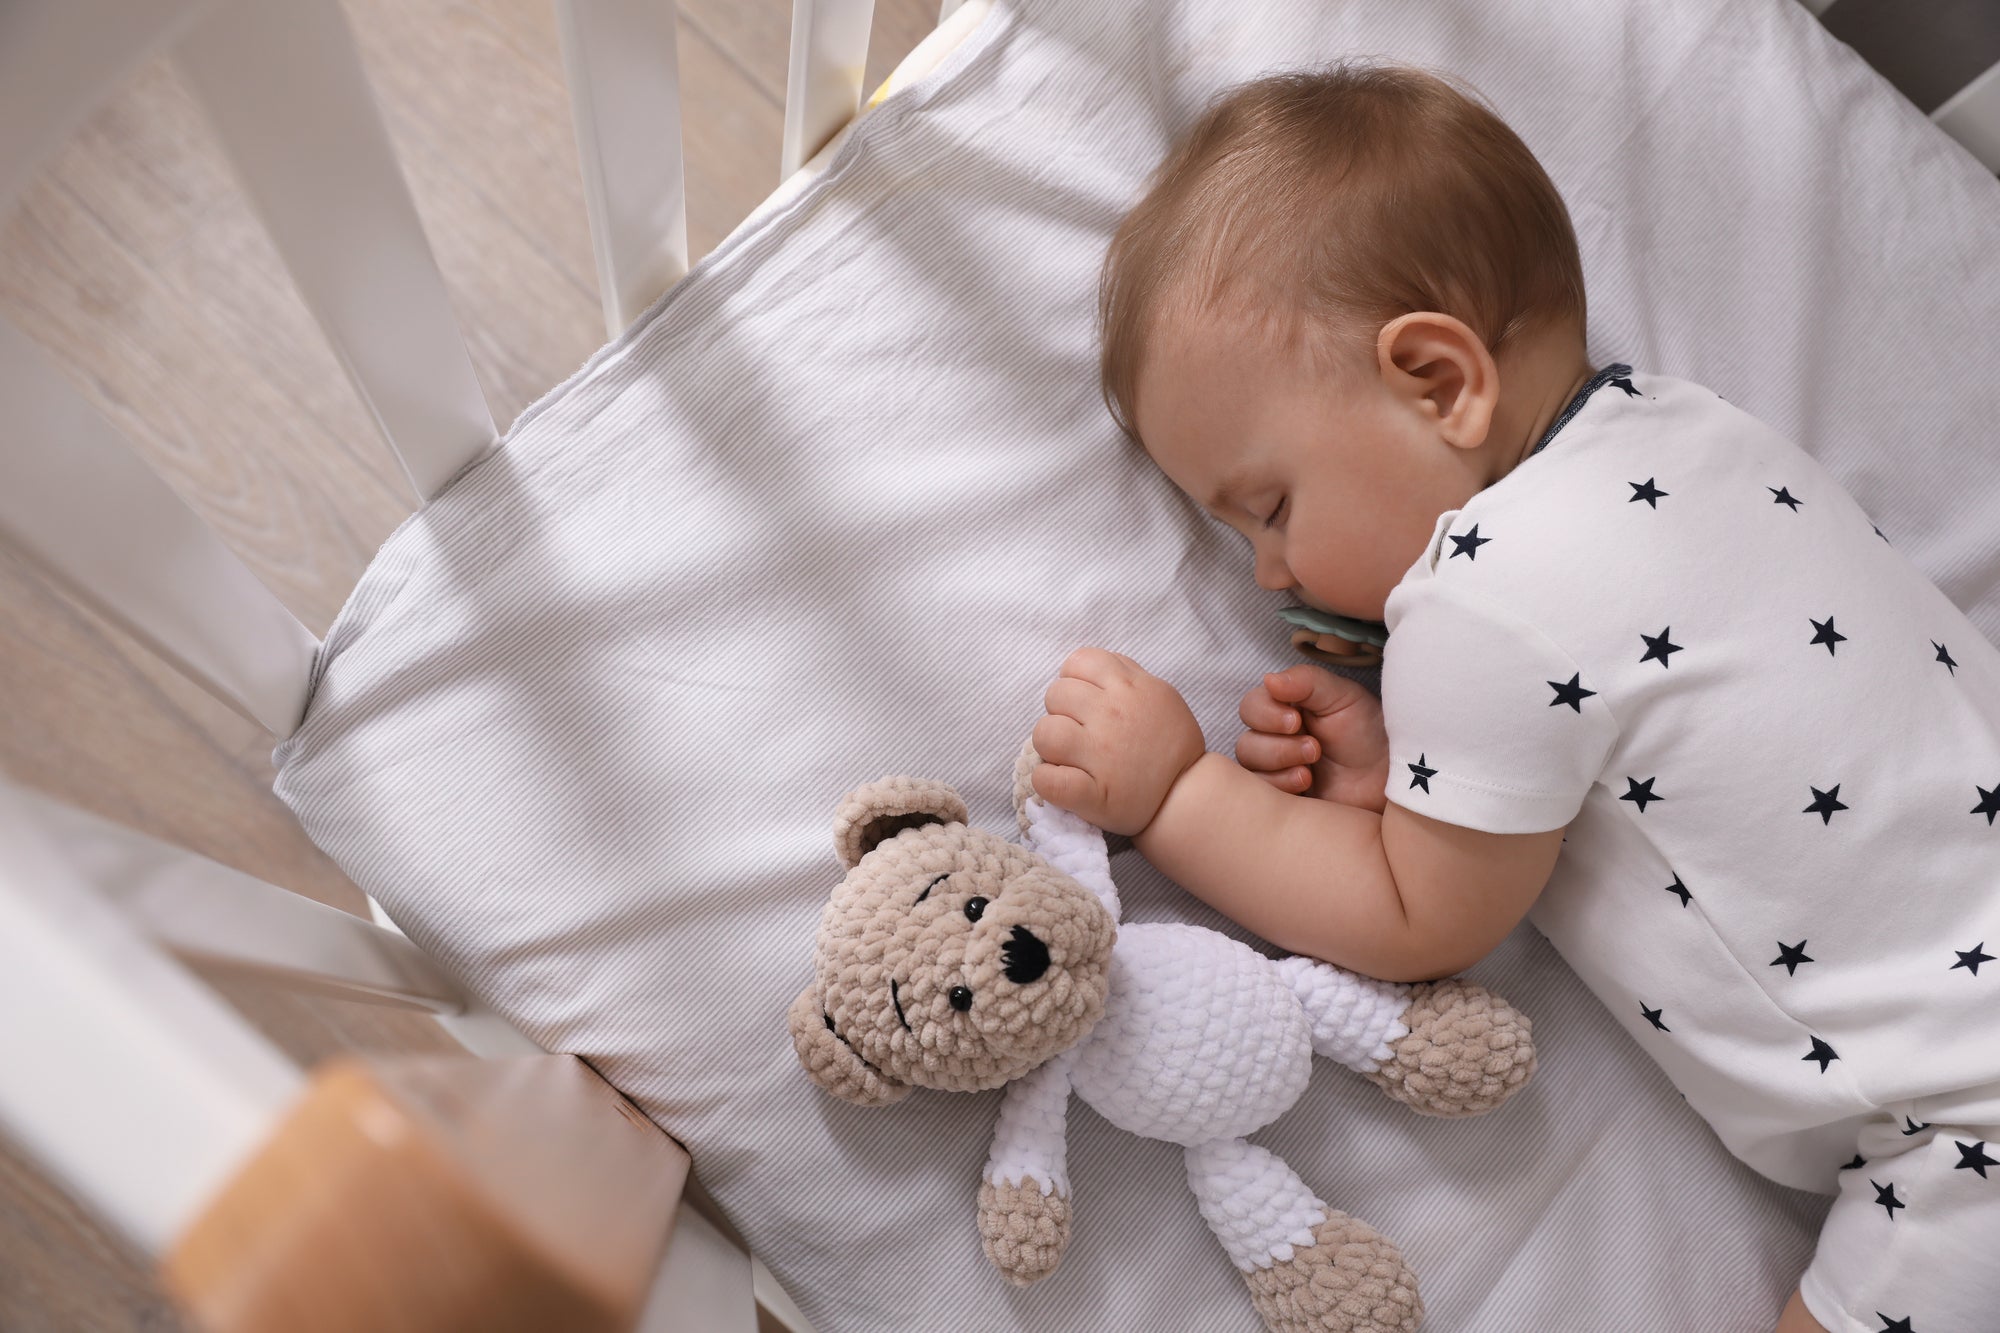 5 Things to Help Baby Sleep